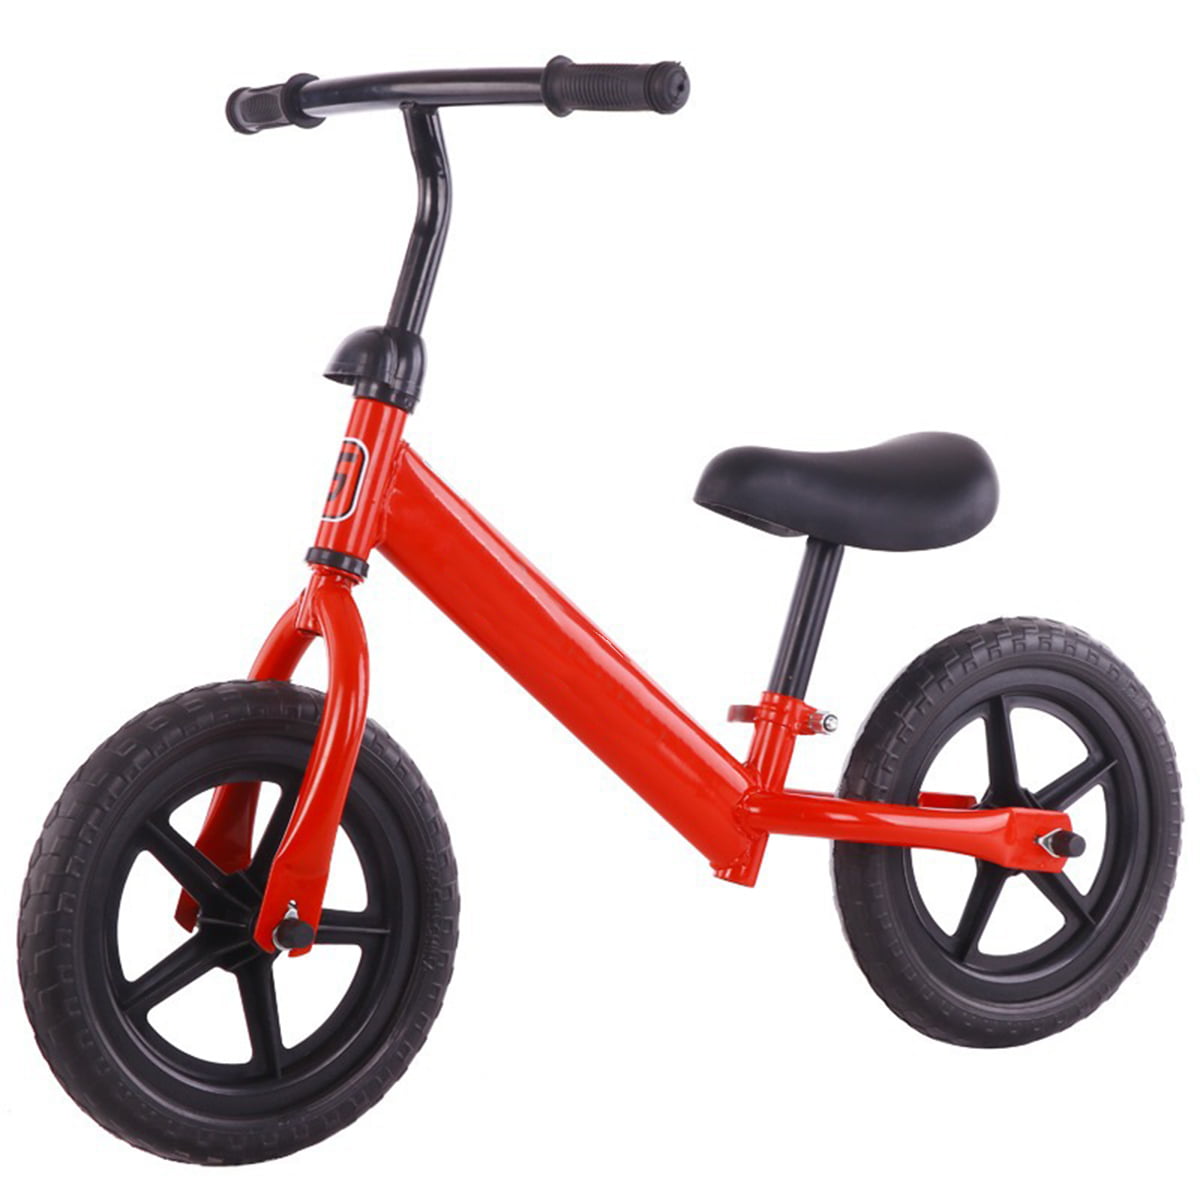 Kids Balance Bike 12" Walker No Pedal Child Training Bicycle Toy Adjustable Seat 